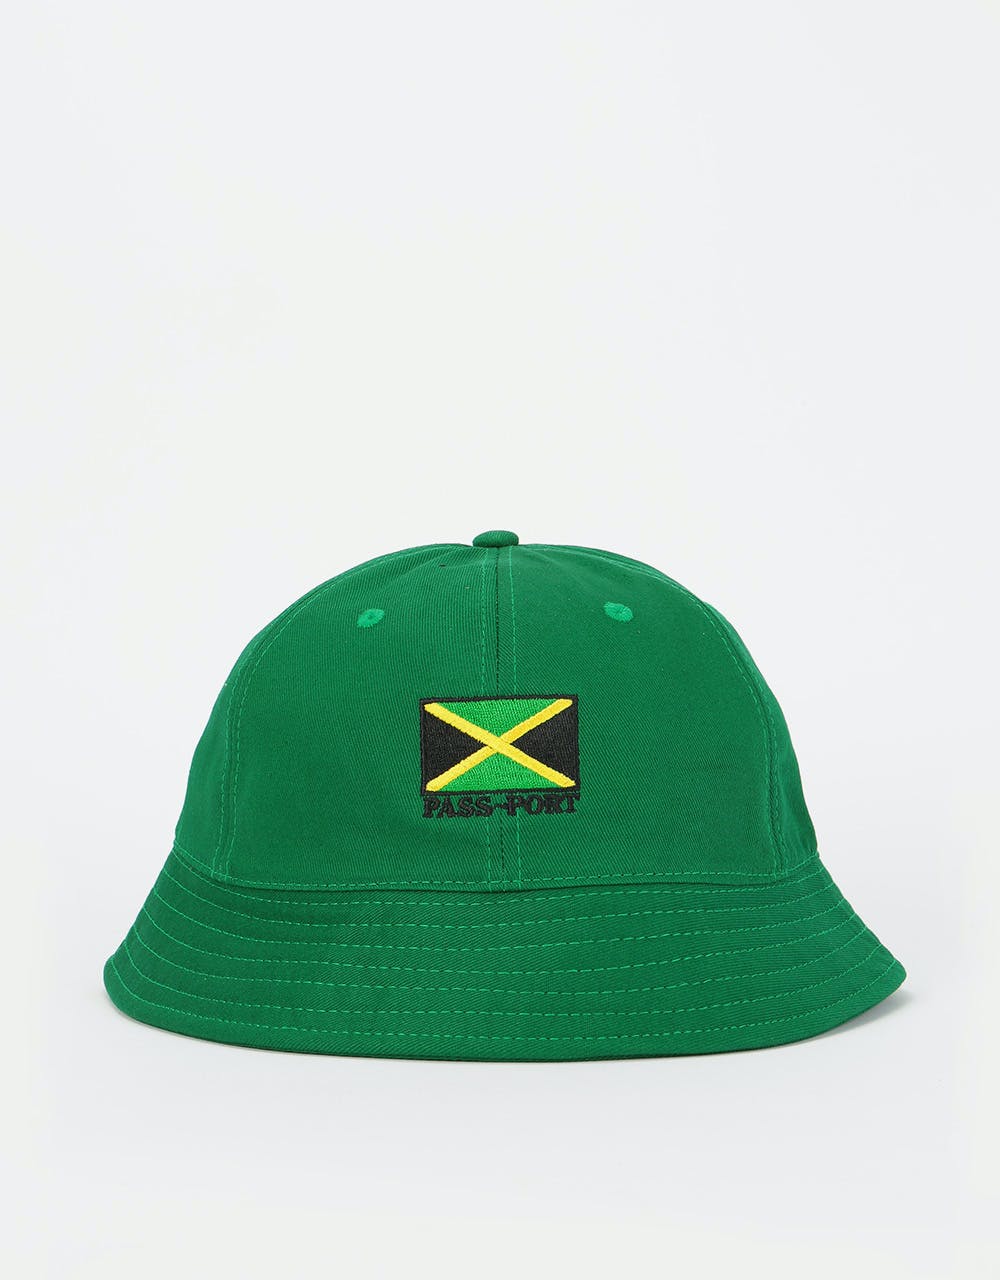 Pass Port Jamaica Twill Bucket Hat - Green